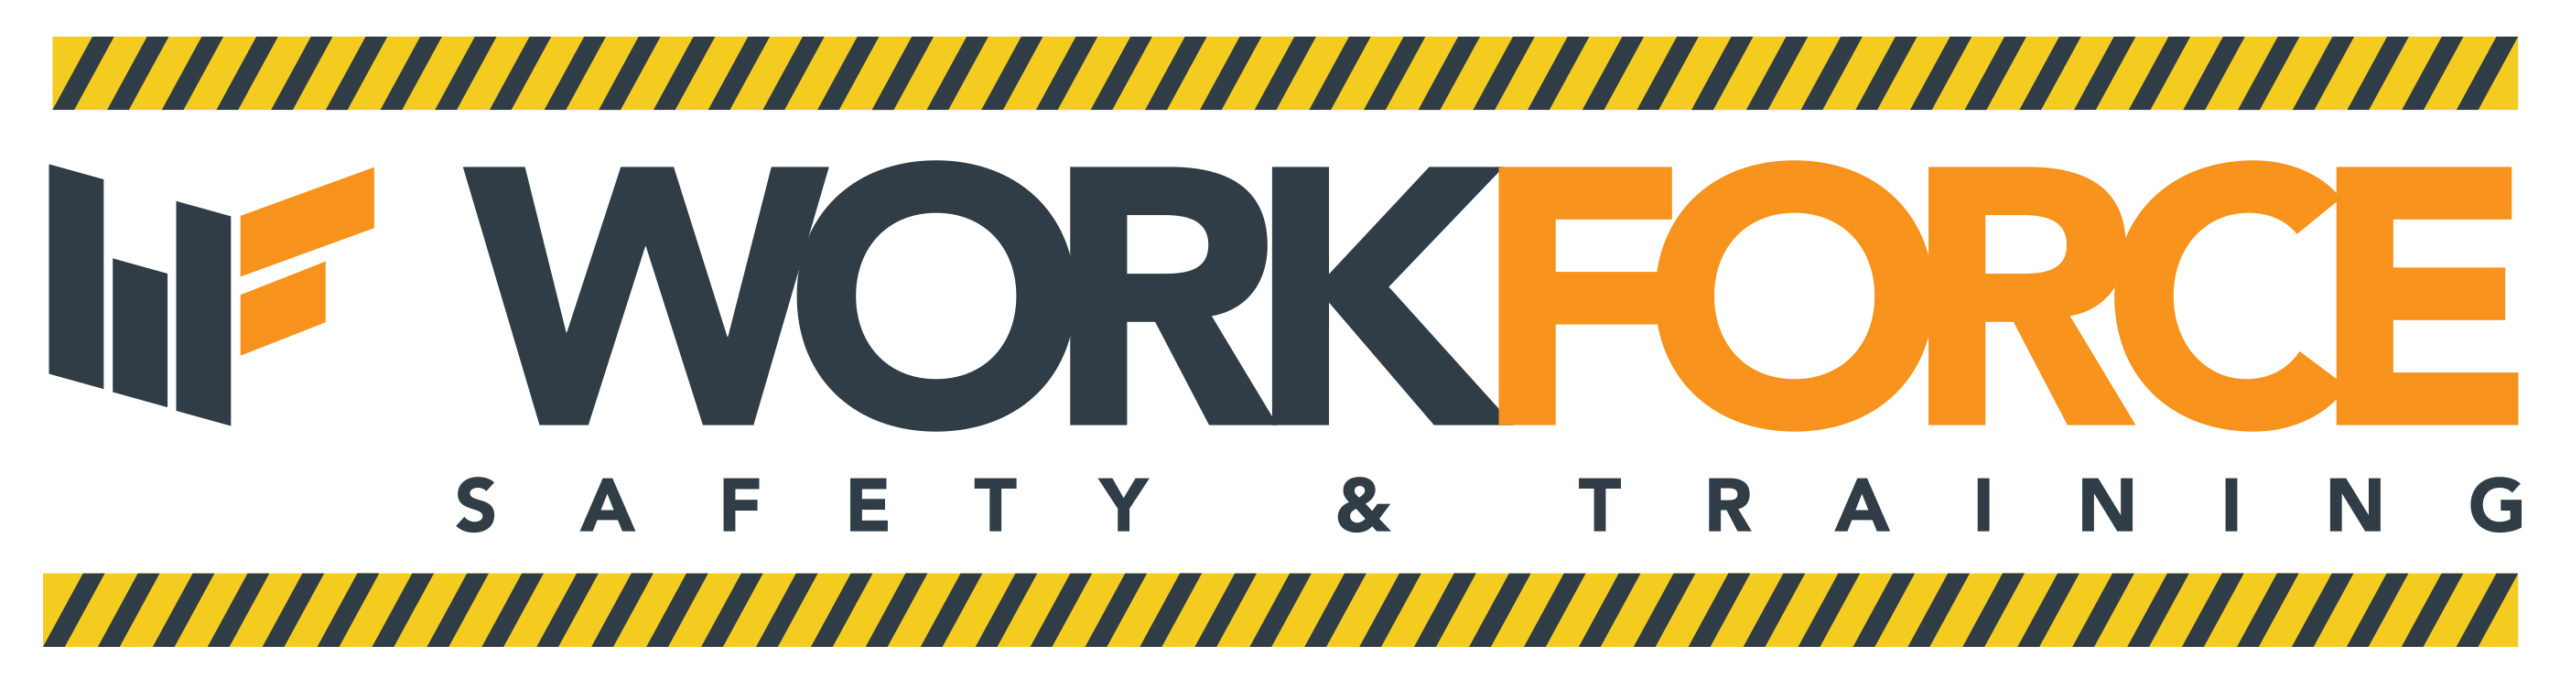 Workforce Safety & Training logo